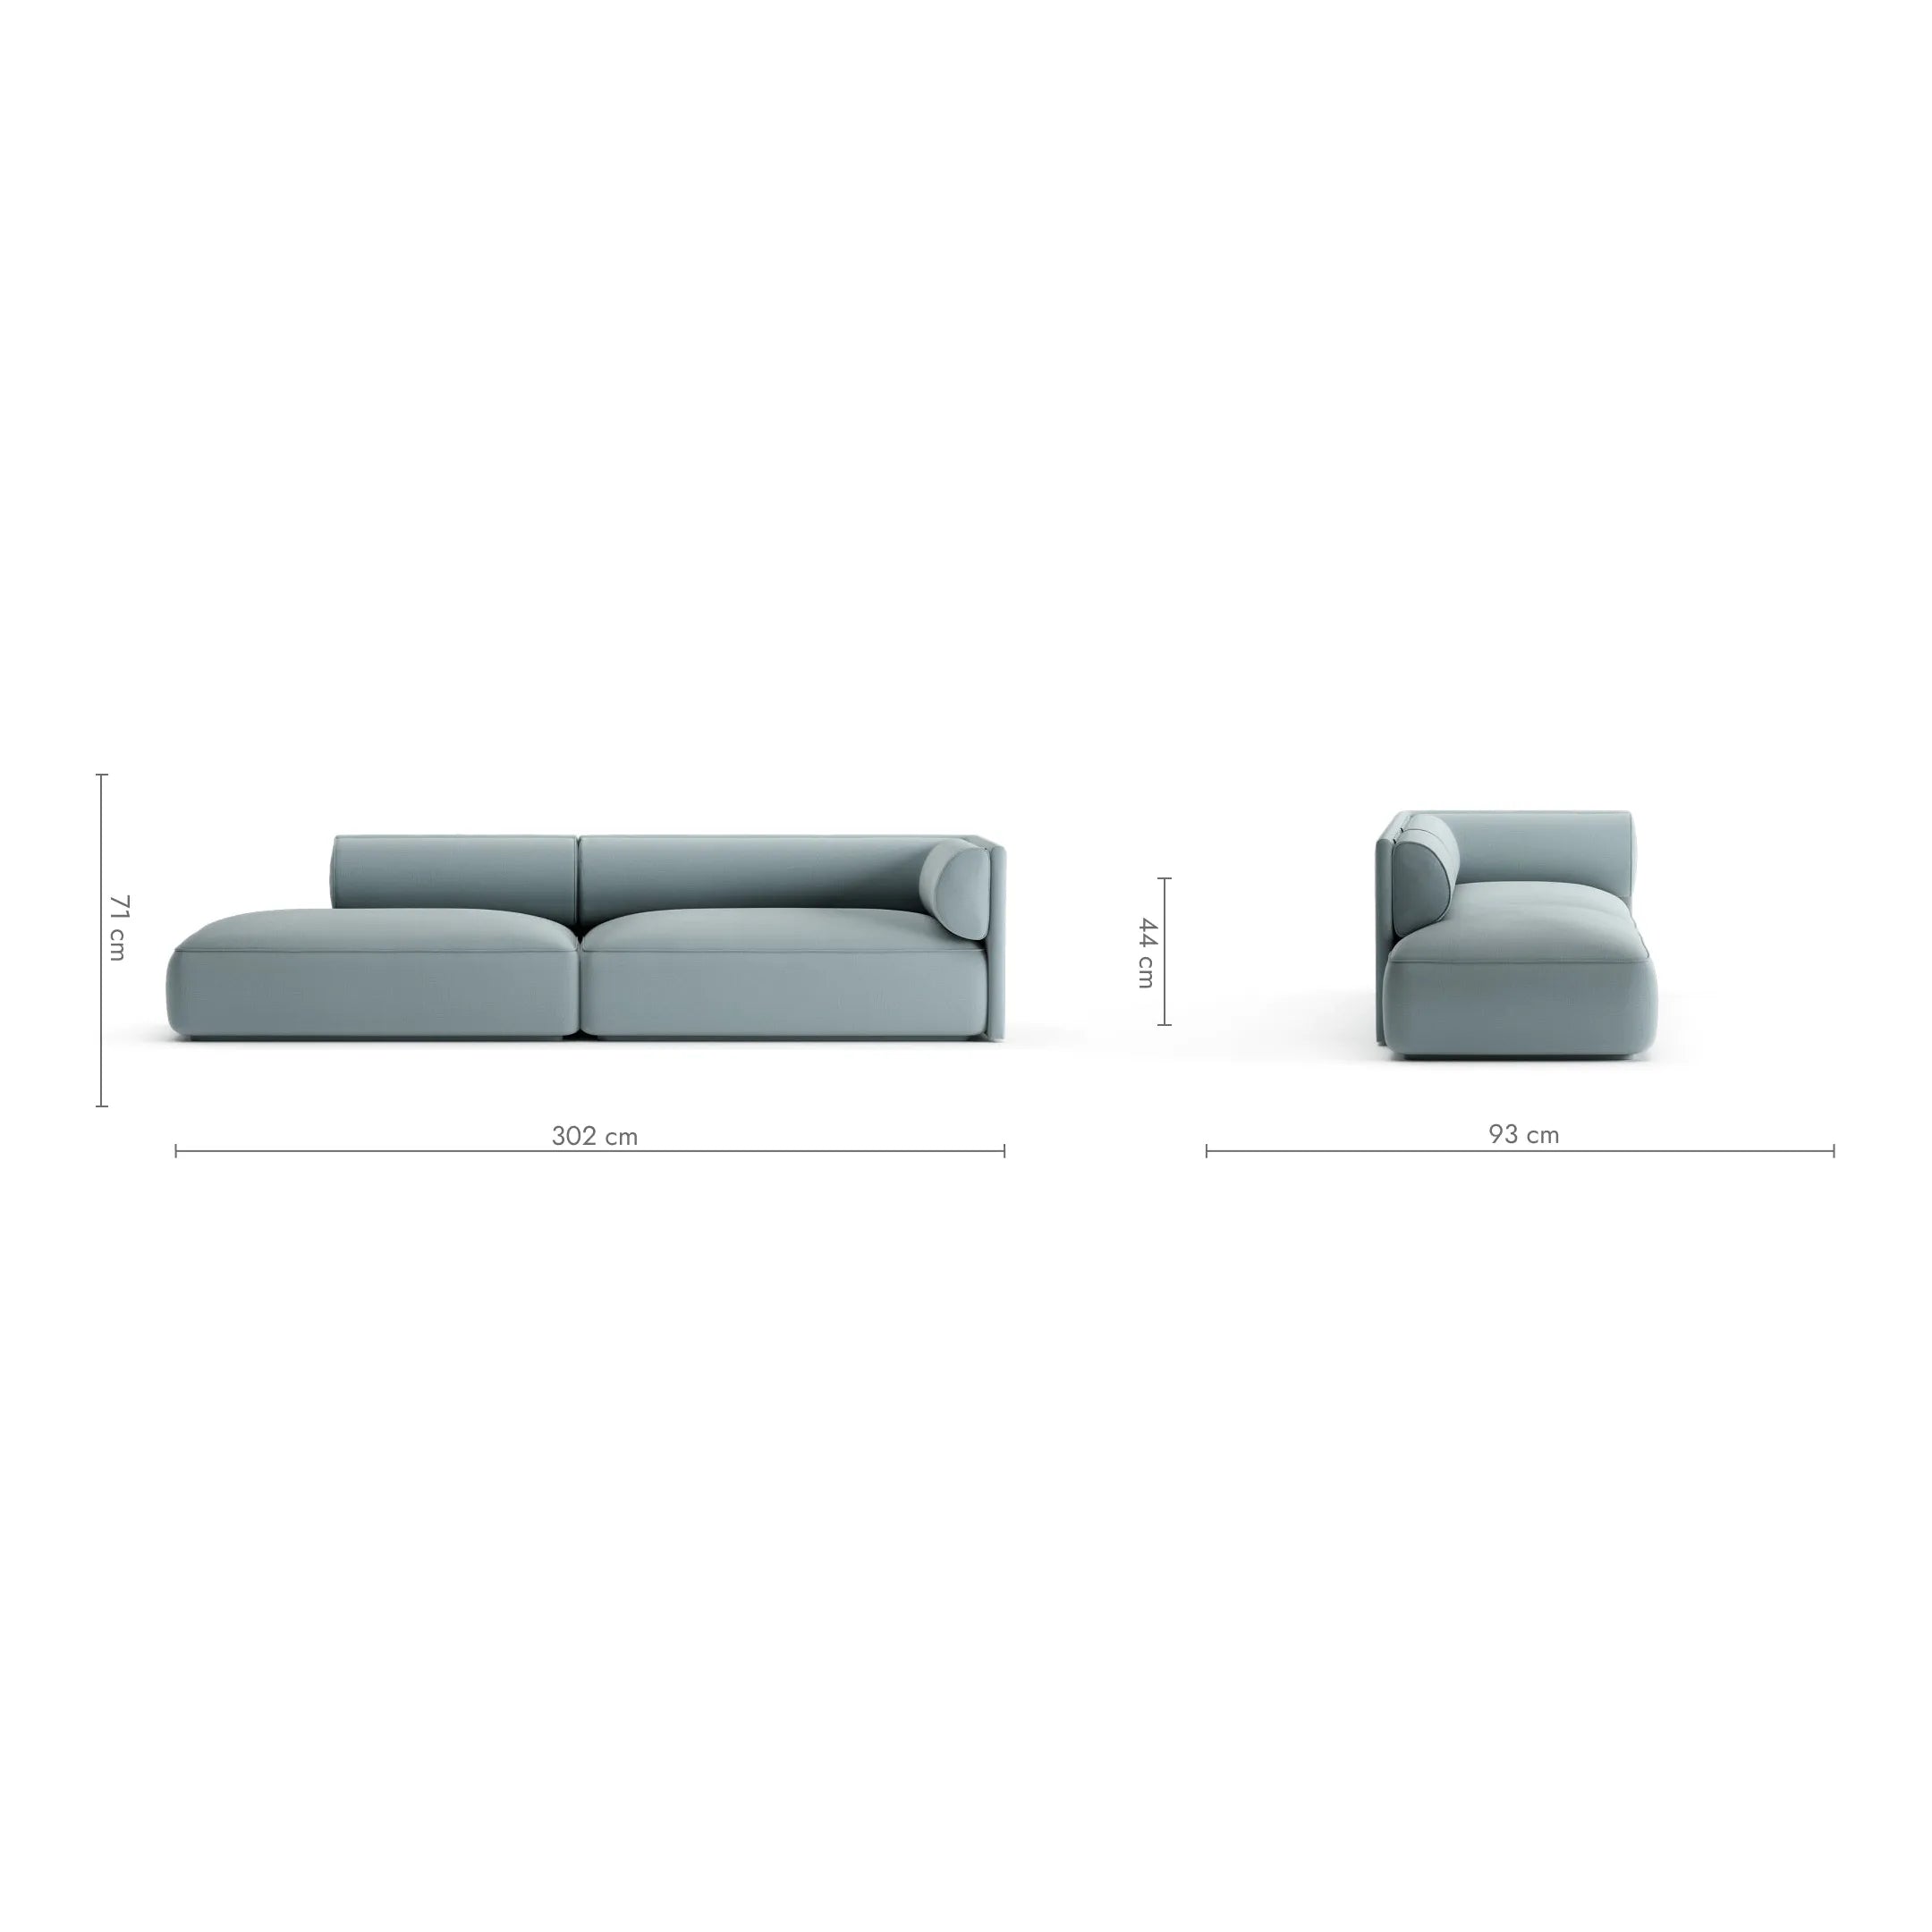 MOOD 4 vietų sofa, balta spalva, dešinė pusė